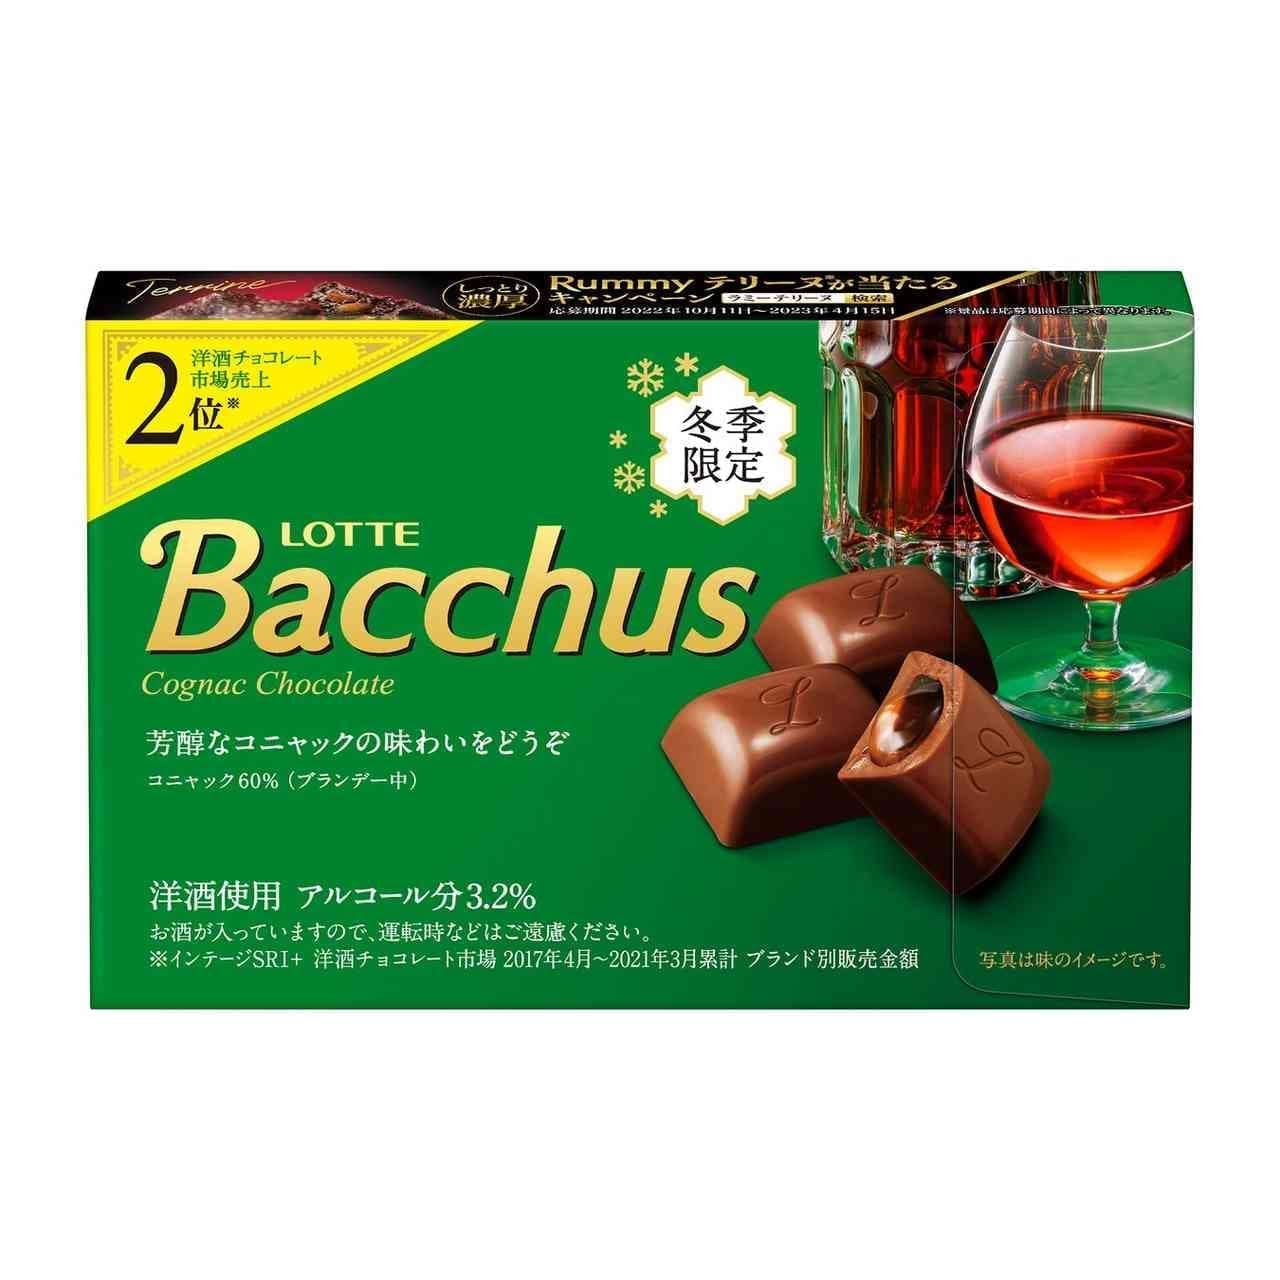 Lotte chocolate "Bacchus".